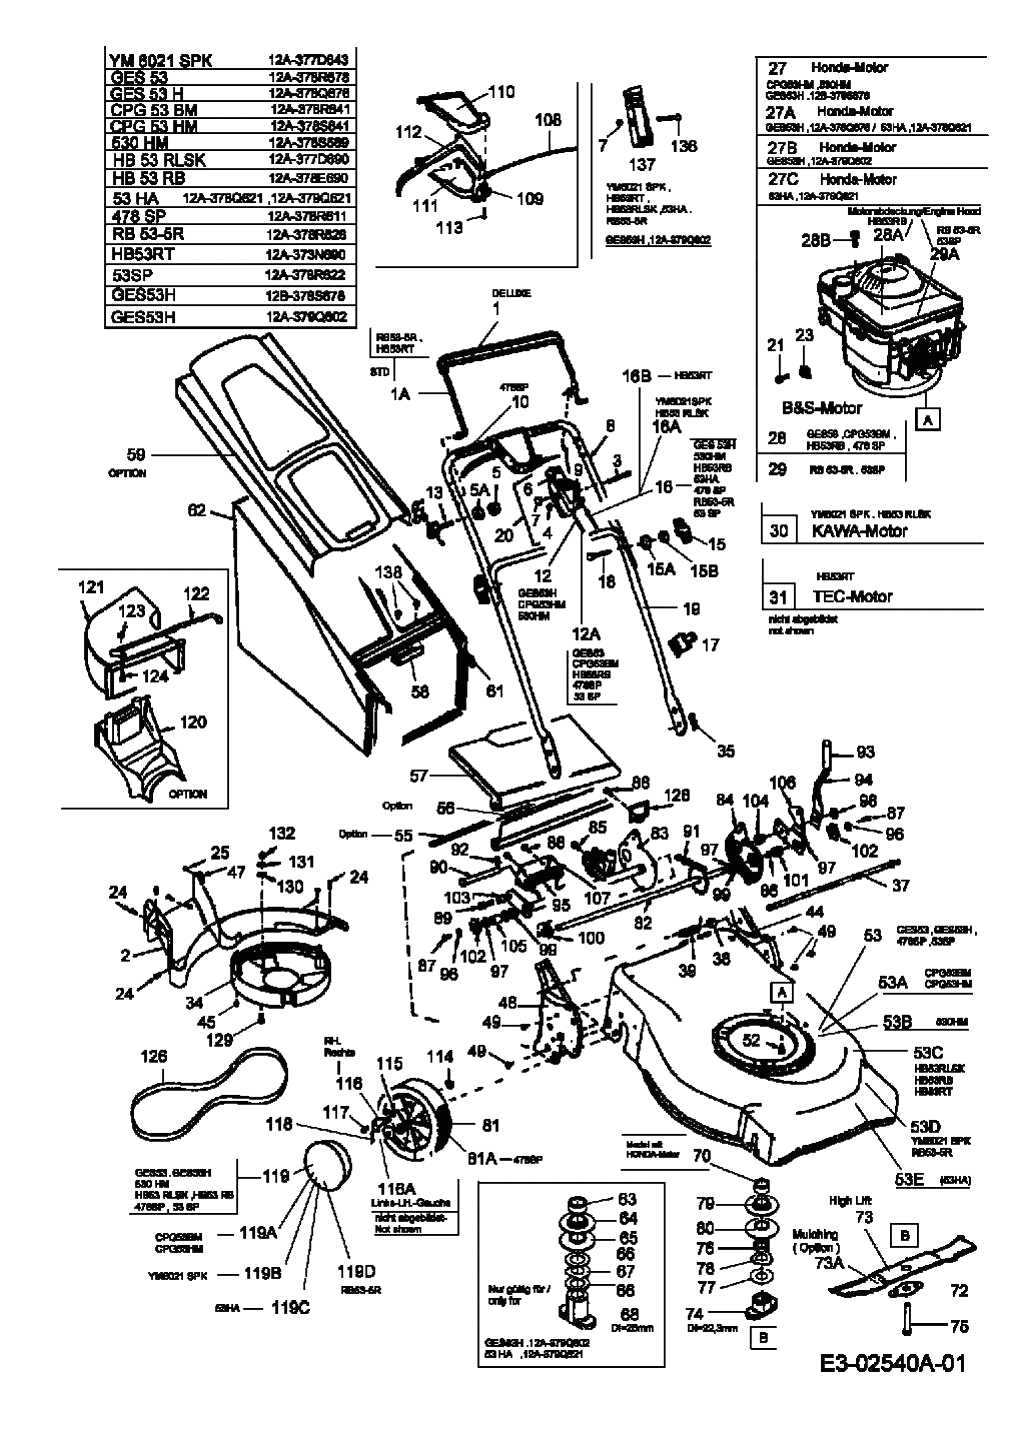 MTD Артикул 12A-378Q676 (год выпуска 2005). Основная деталировка